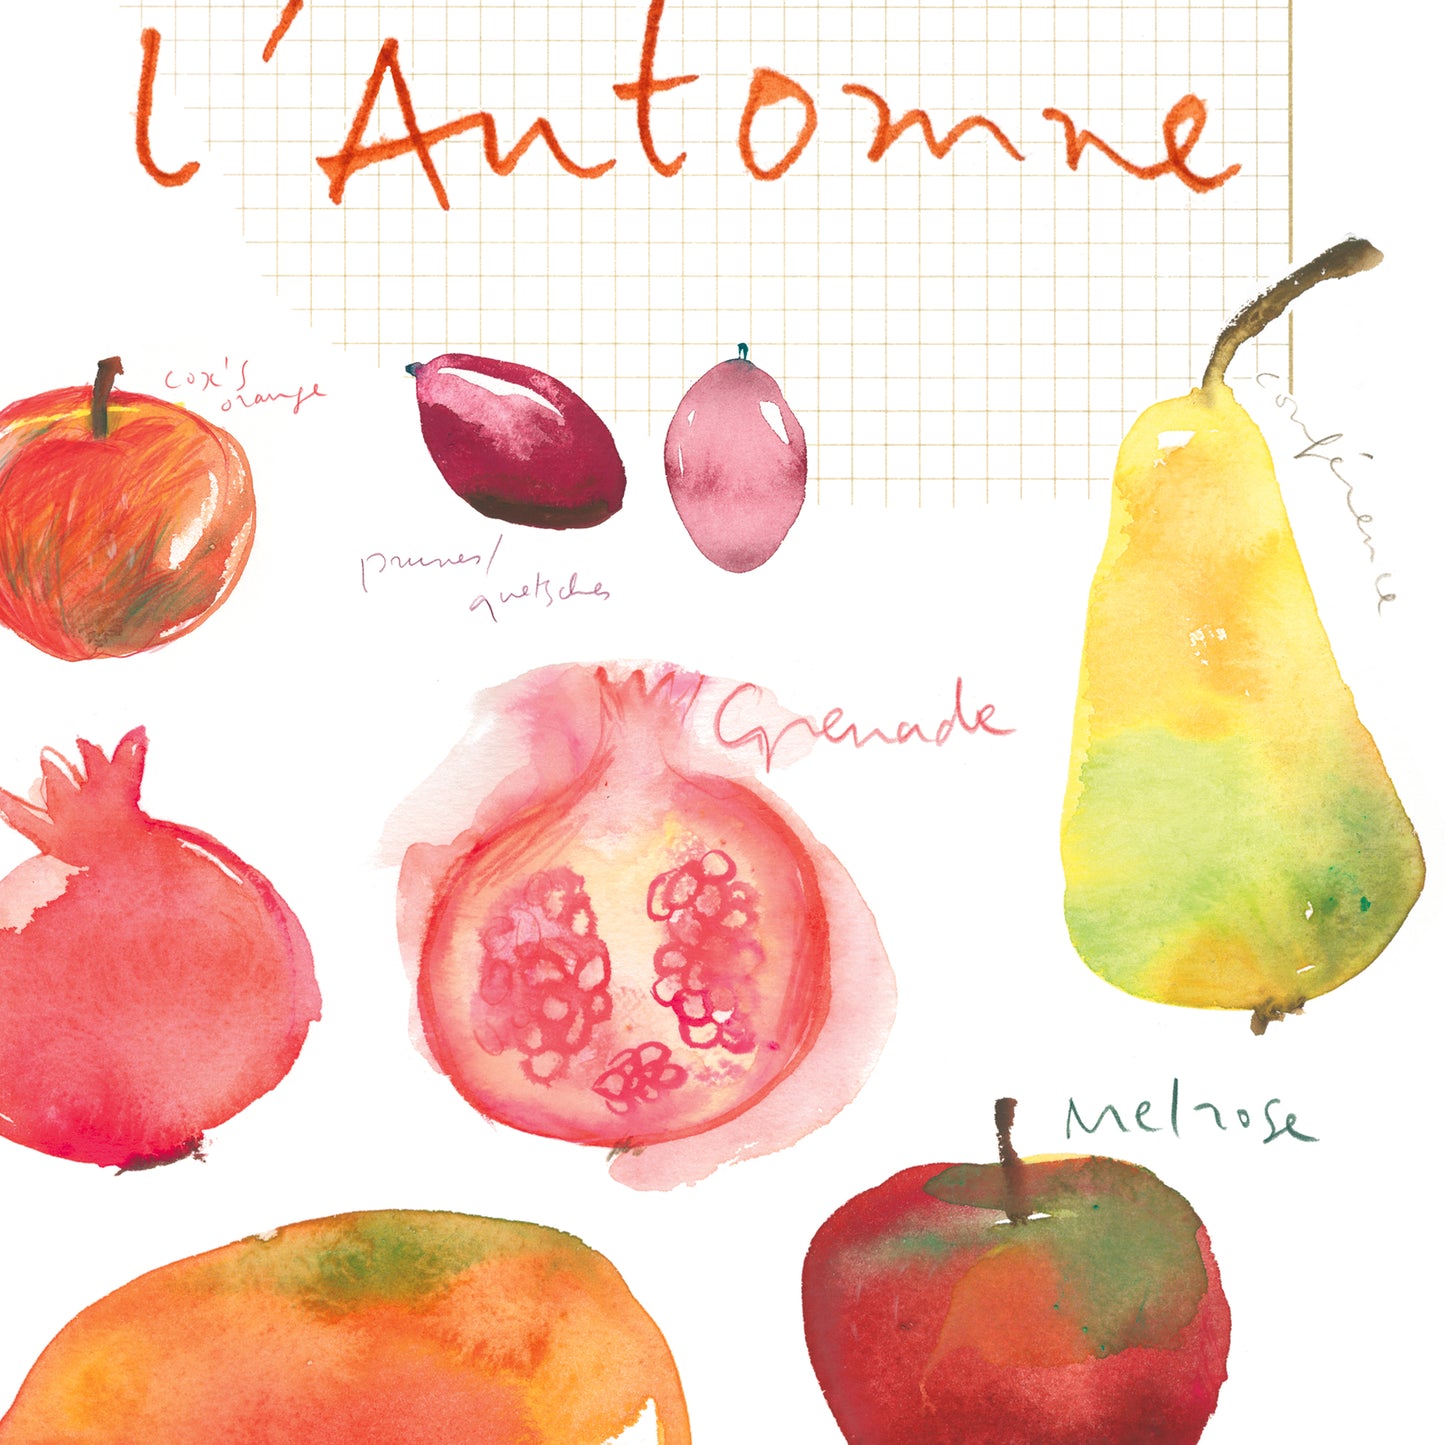 Seasonal fruit print set - In French